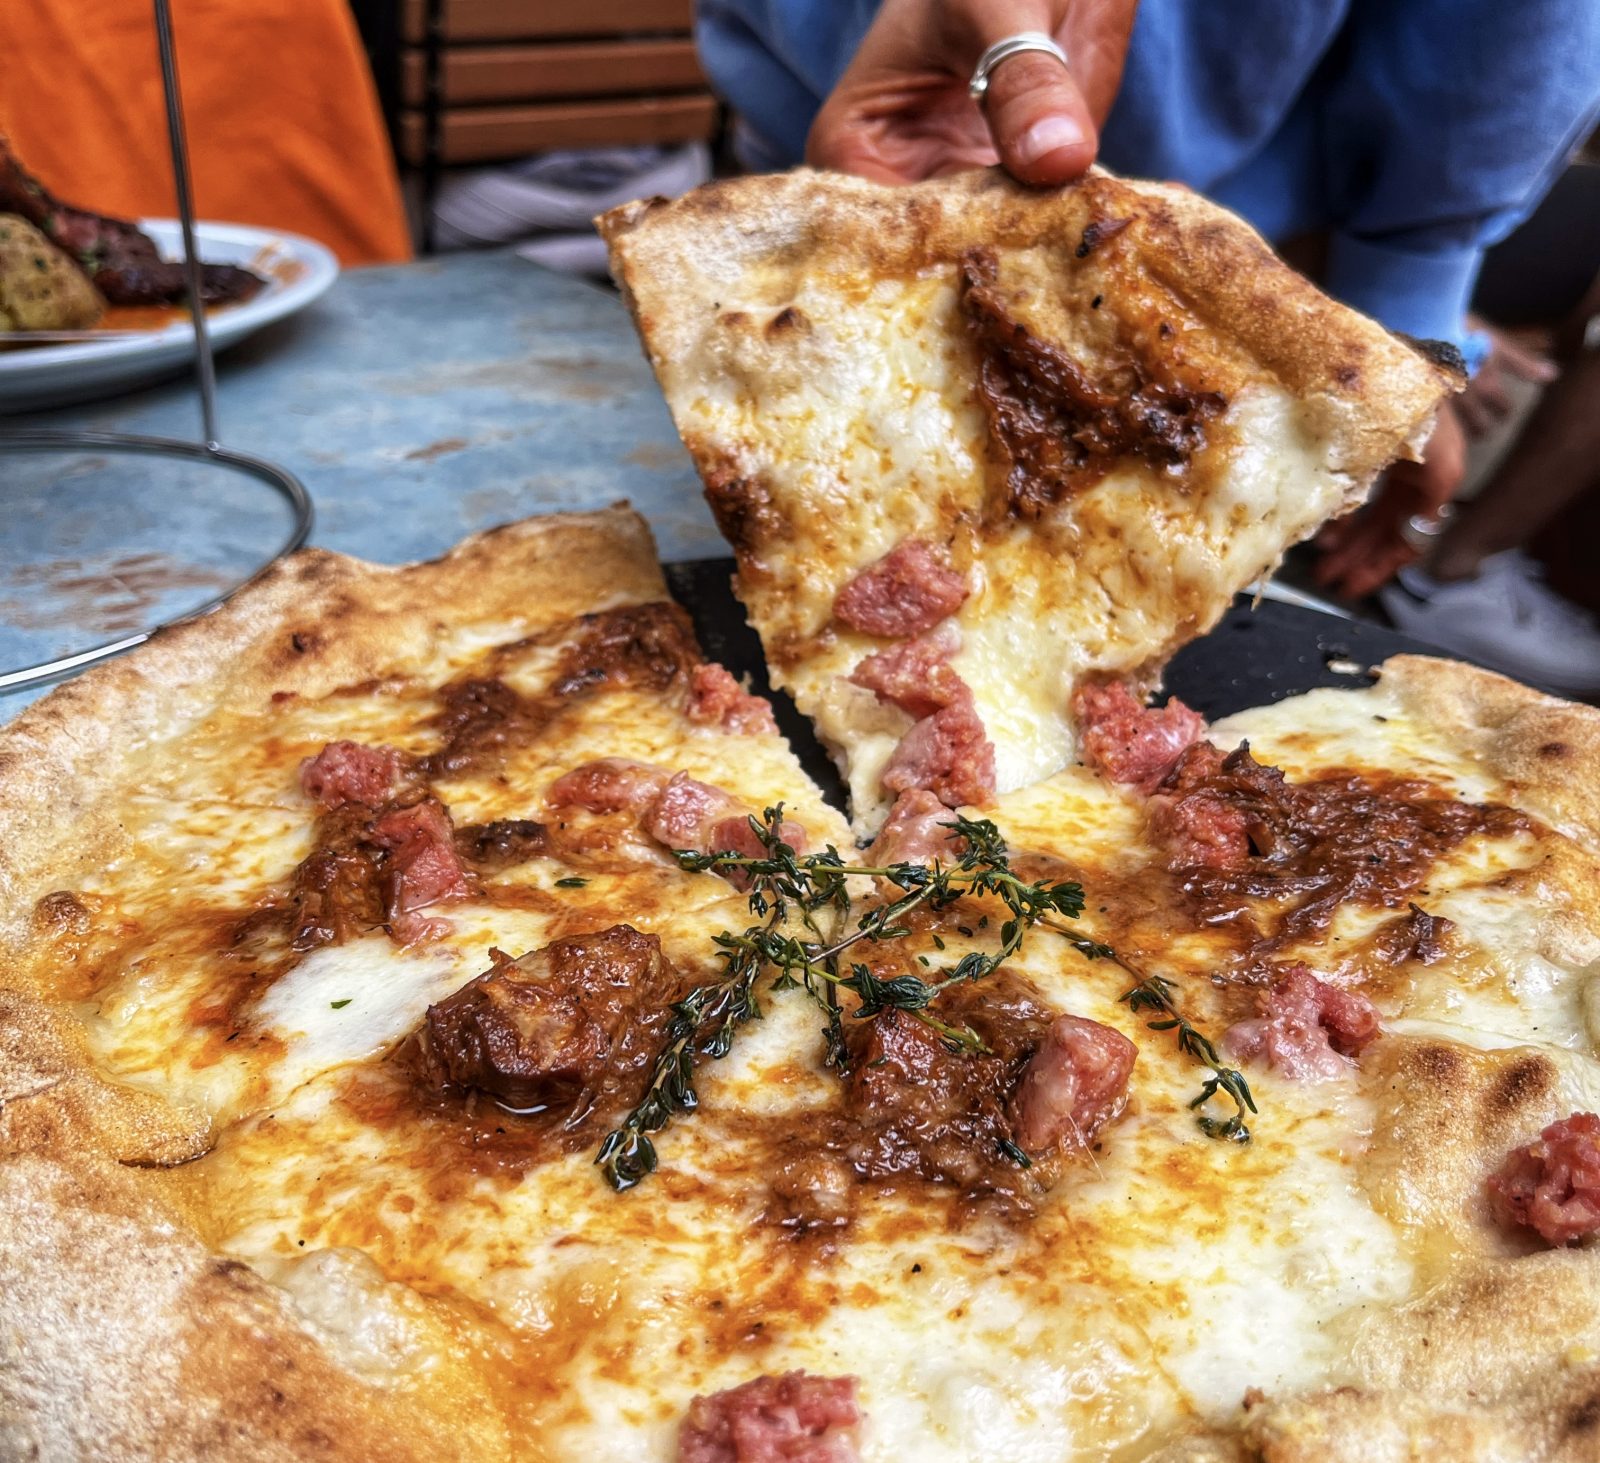 A fresh pizza at Livin' Italy